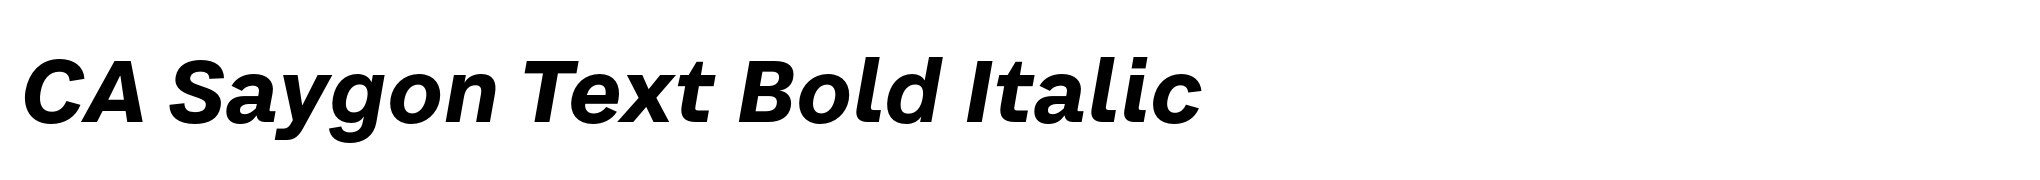 CA Saygon Text Bold Italic image